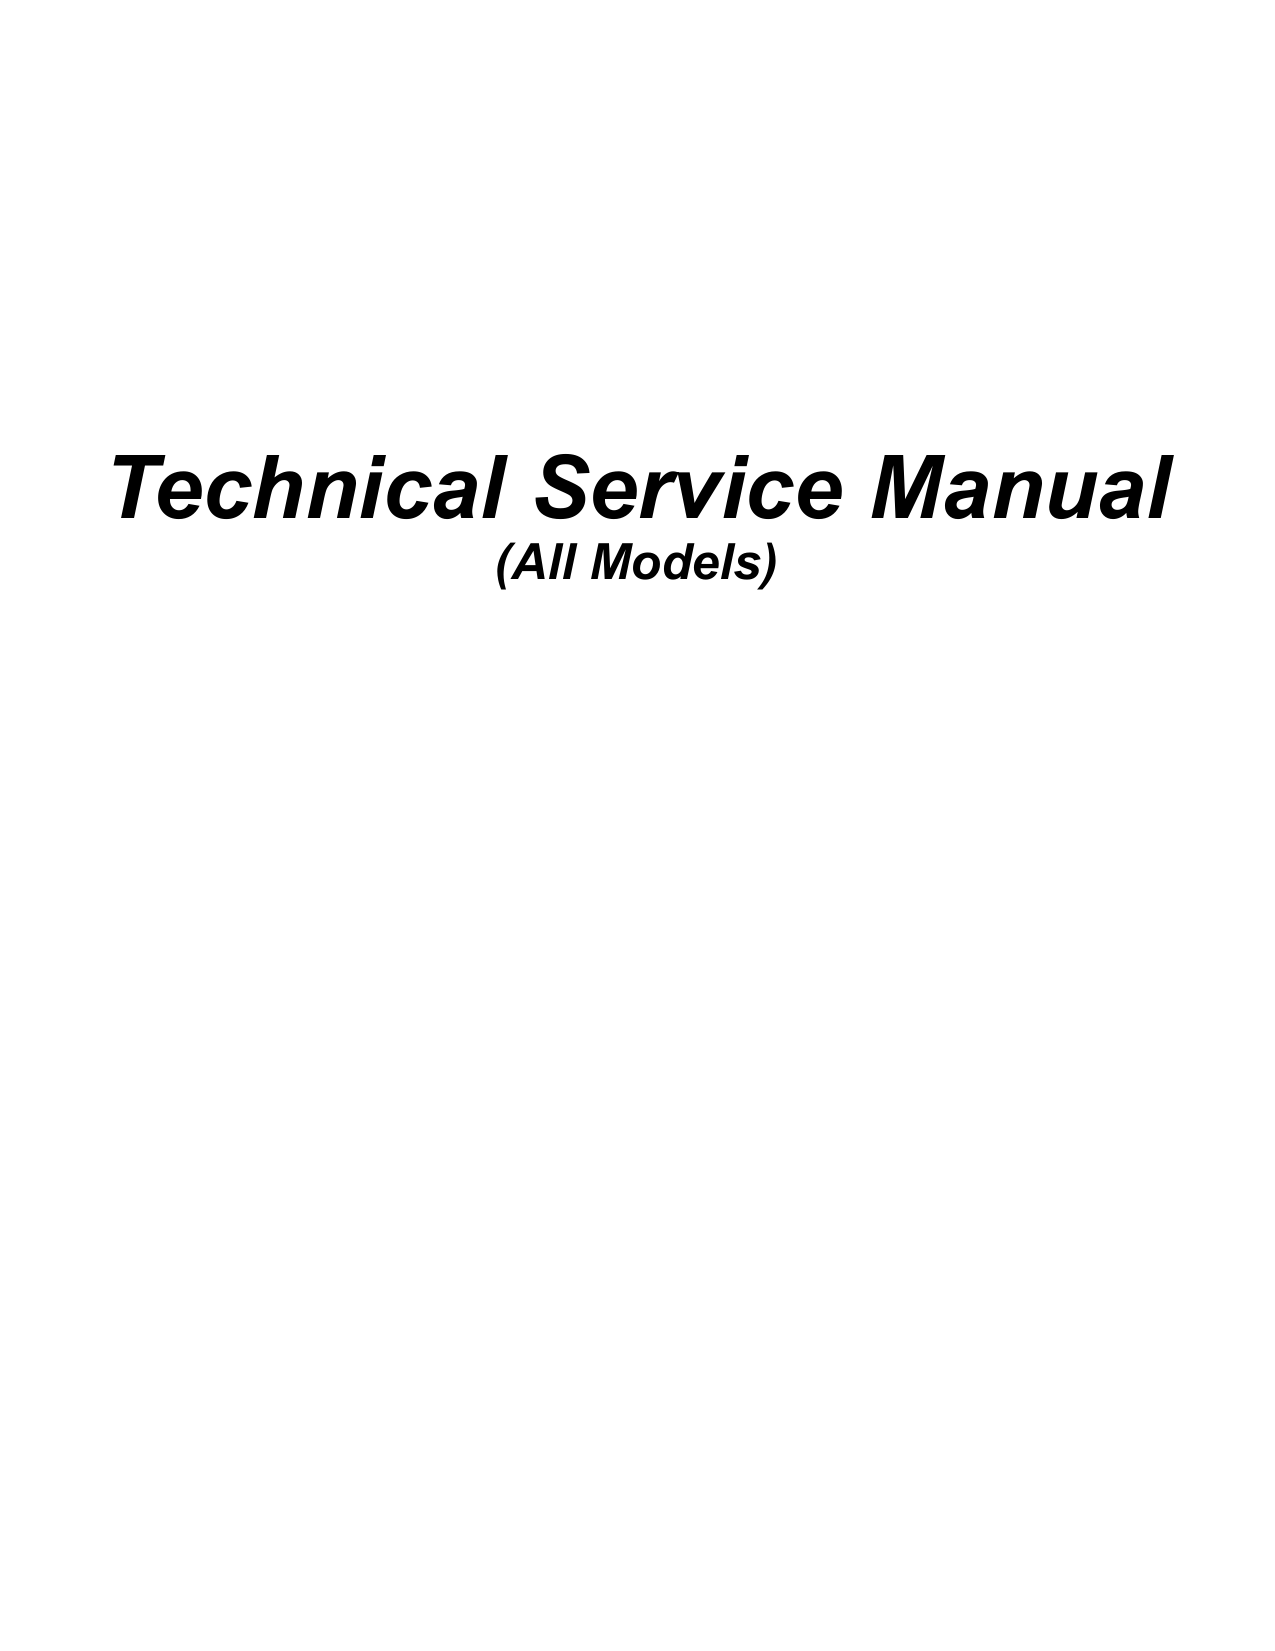 pdf for True Refrigerator TD-50-18 manual